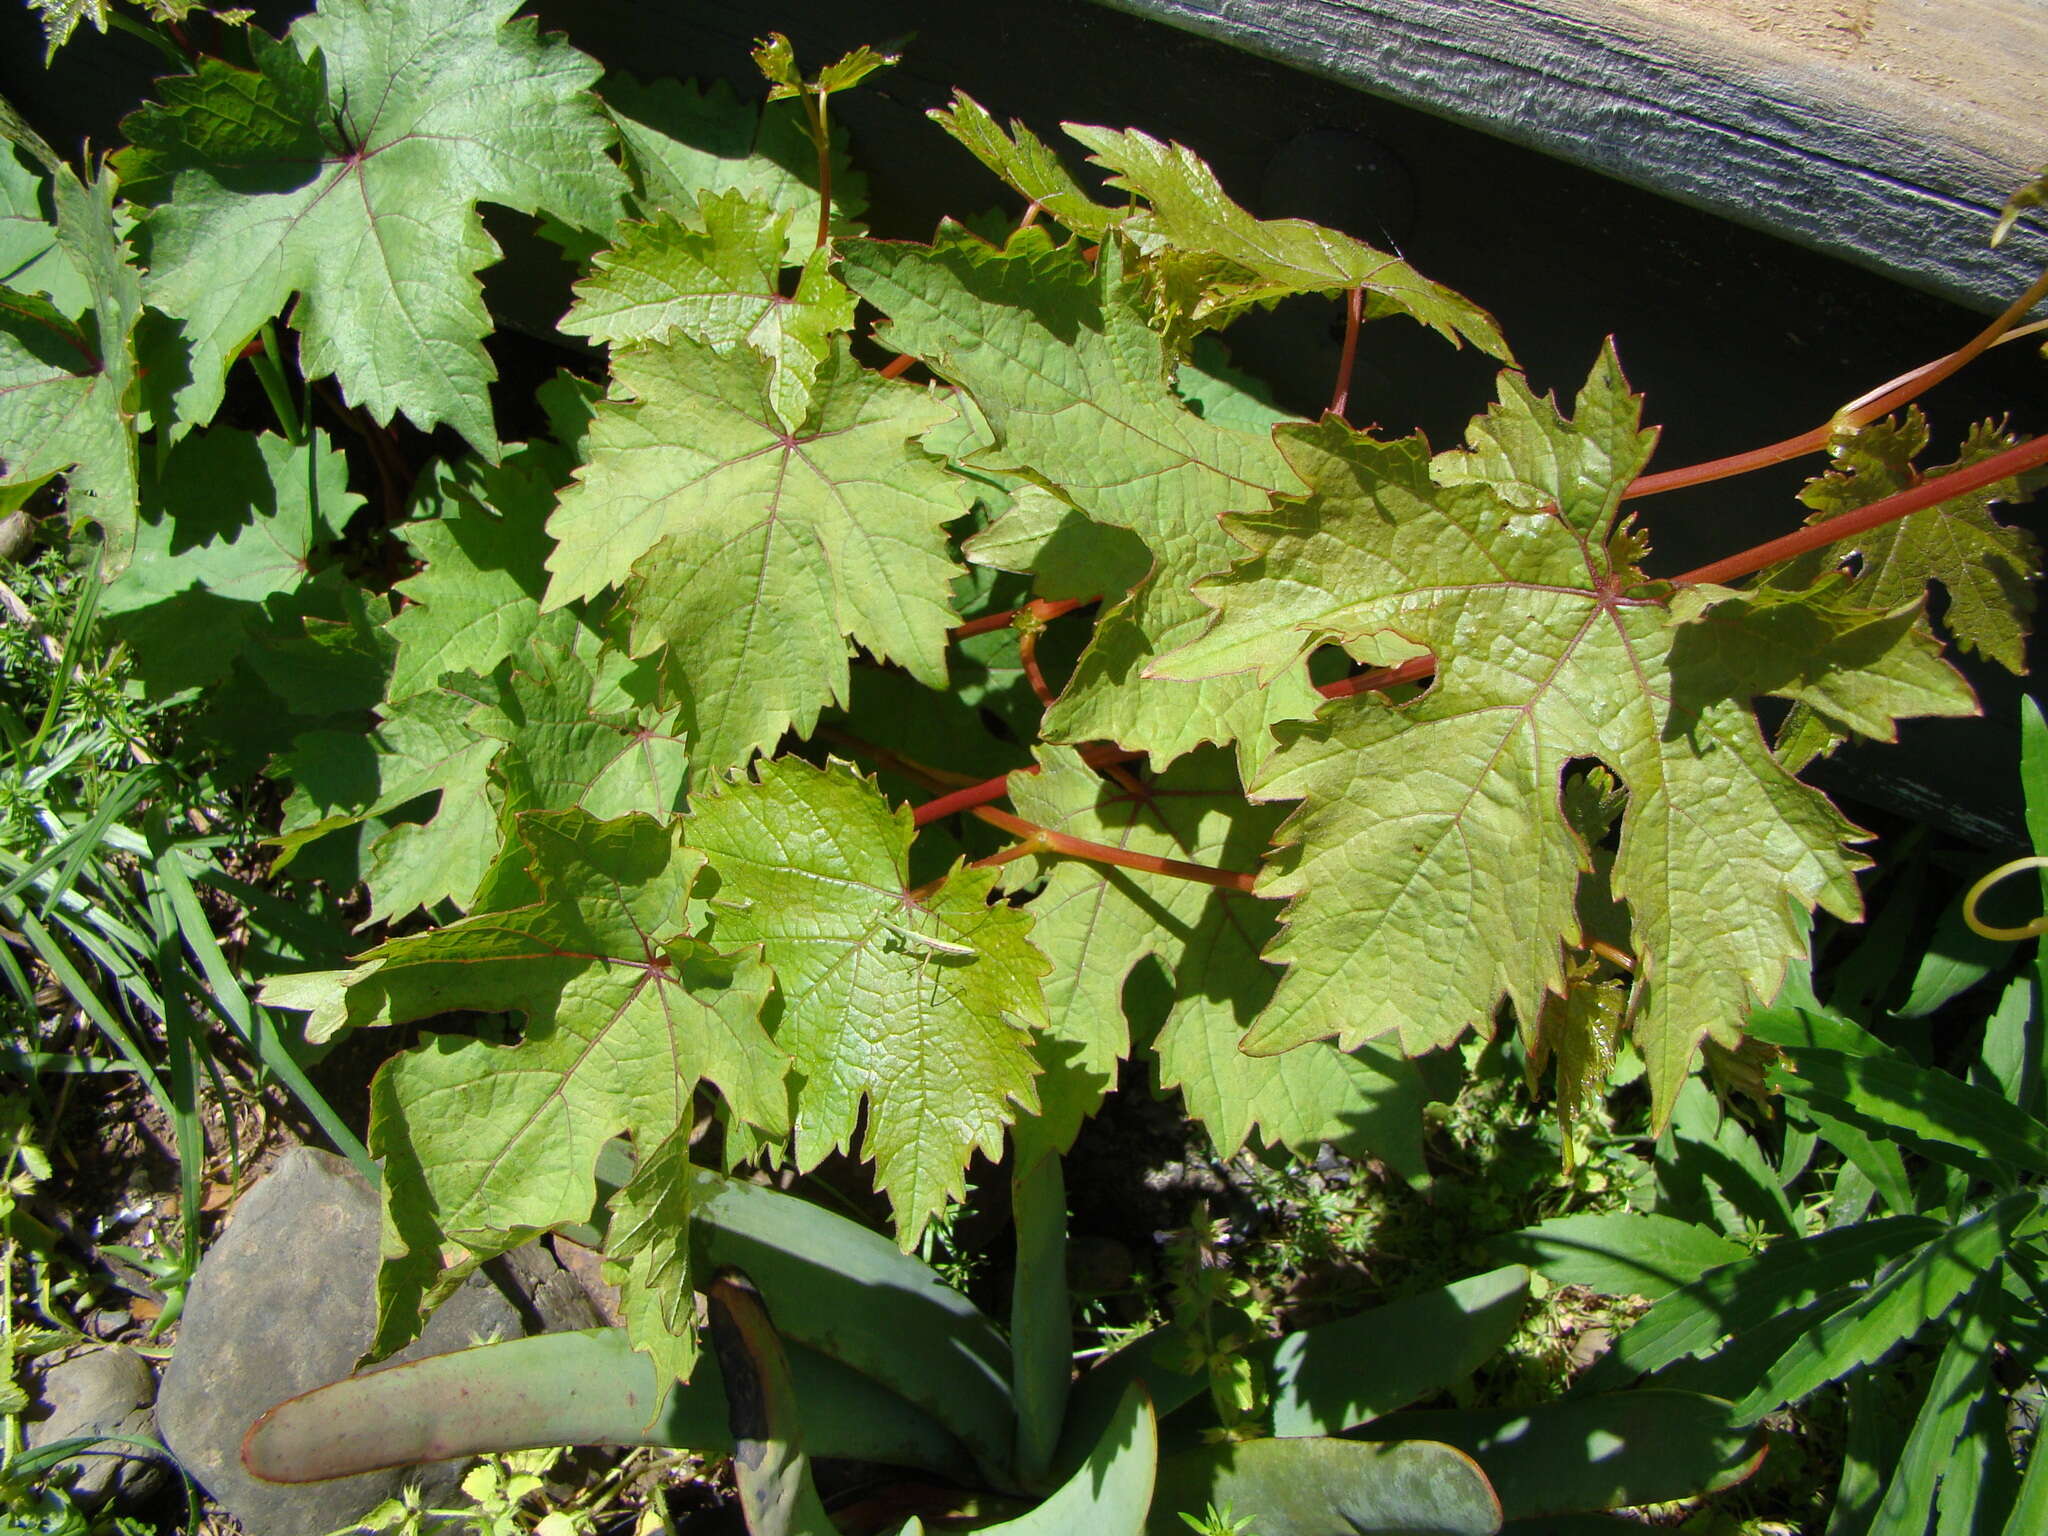 Image of wine grape